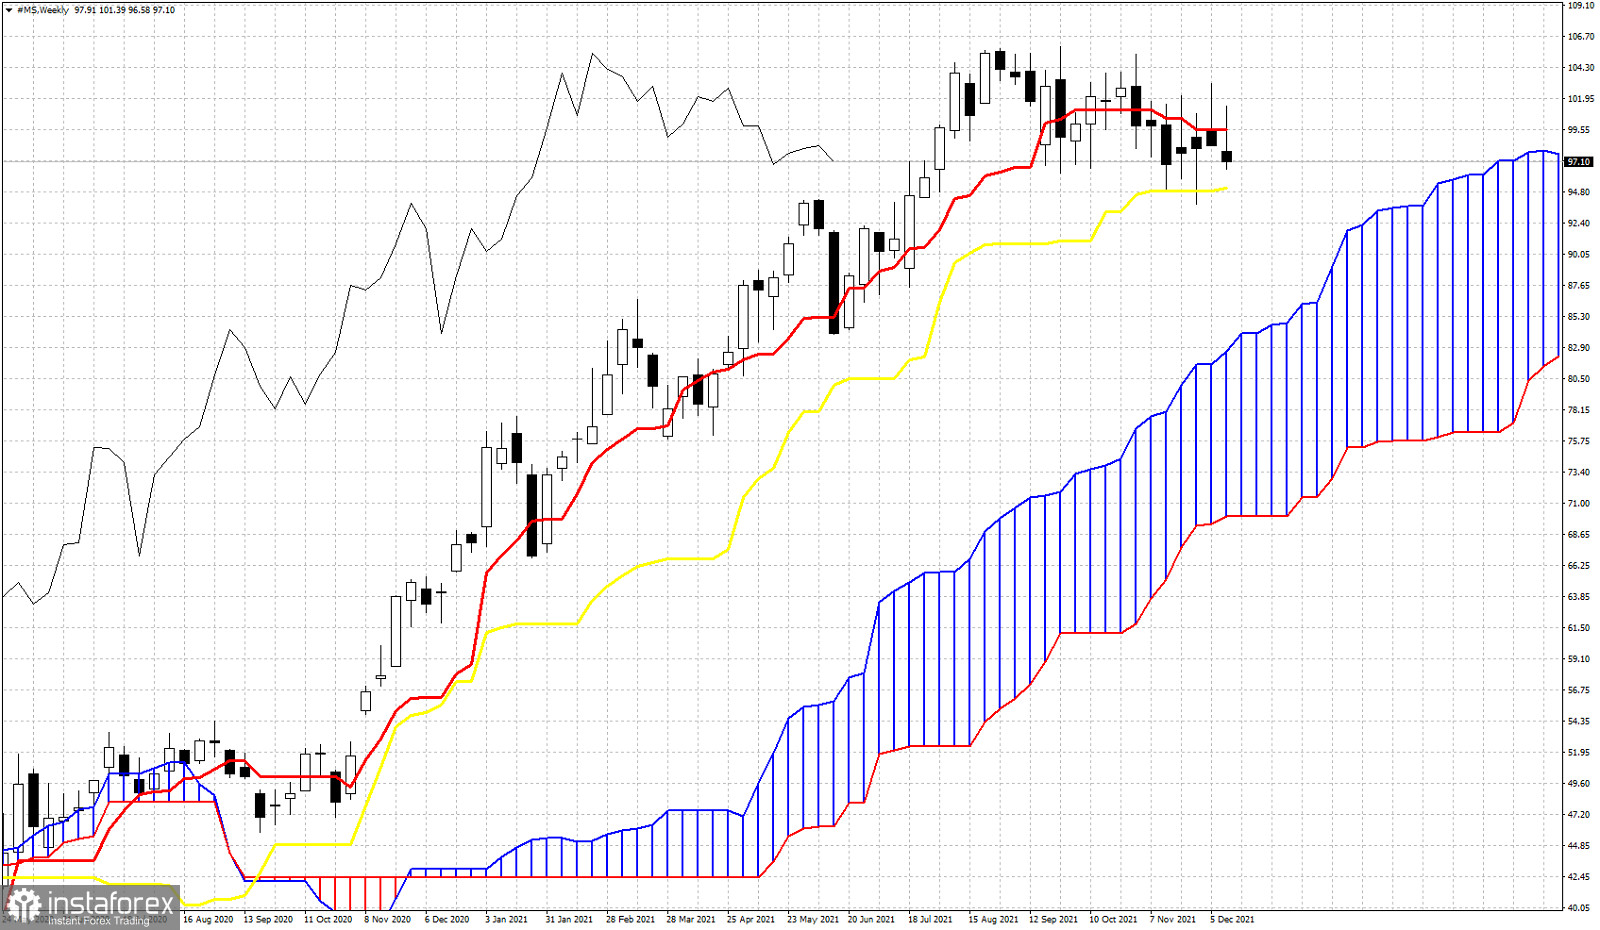 Weekly Ichimoku cloud indicator for Morgan Stanley's stock price.